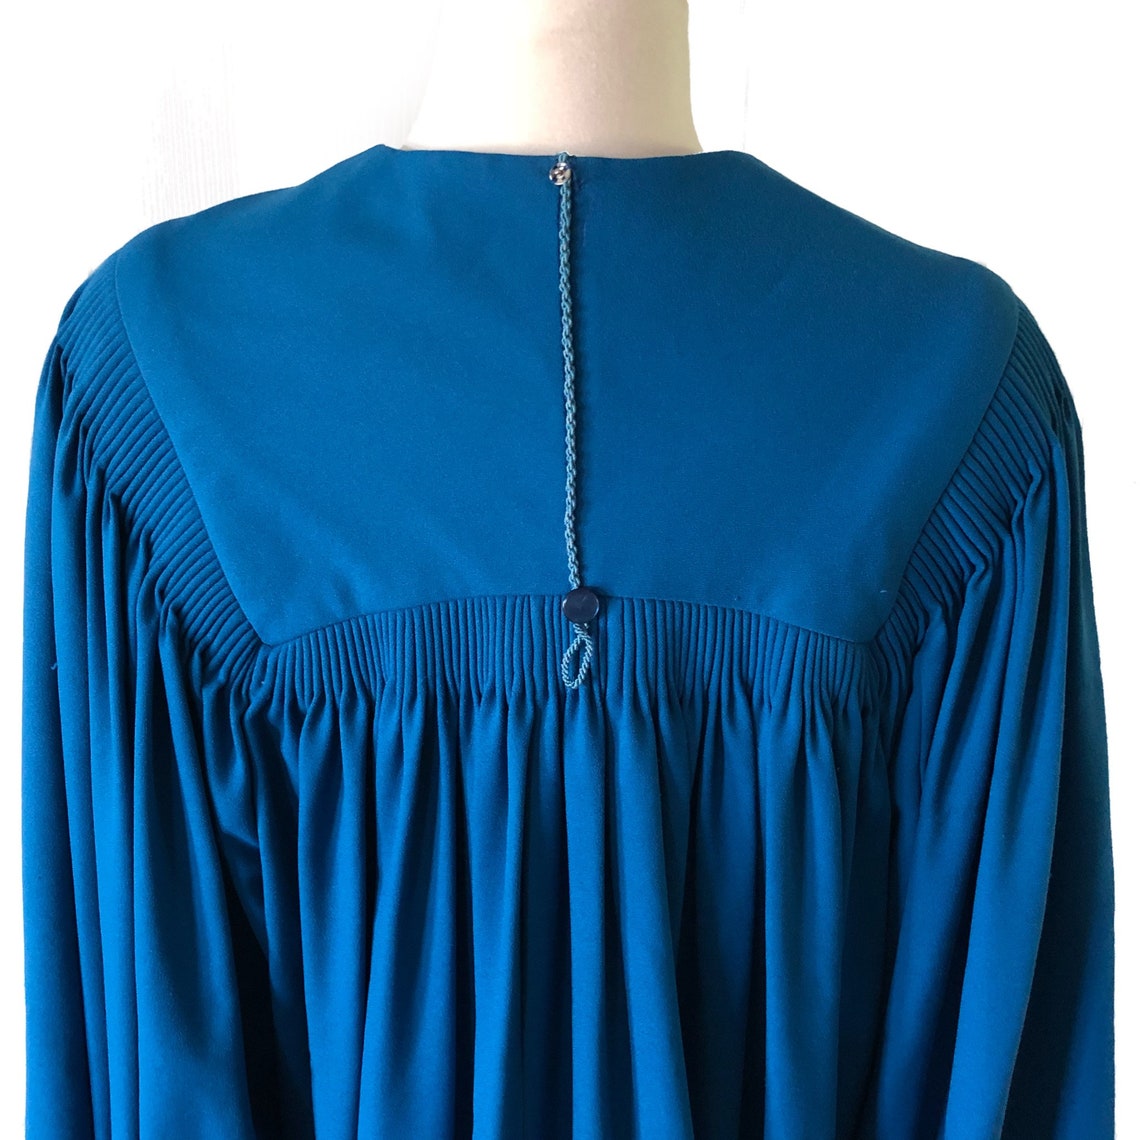 Vintage graduation gown choir robe blue angel sleeves | Etsy